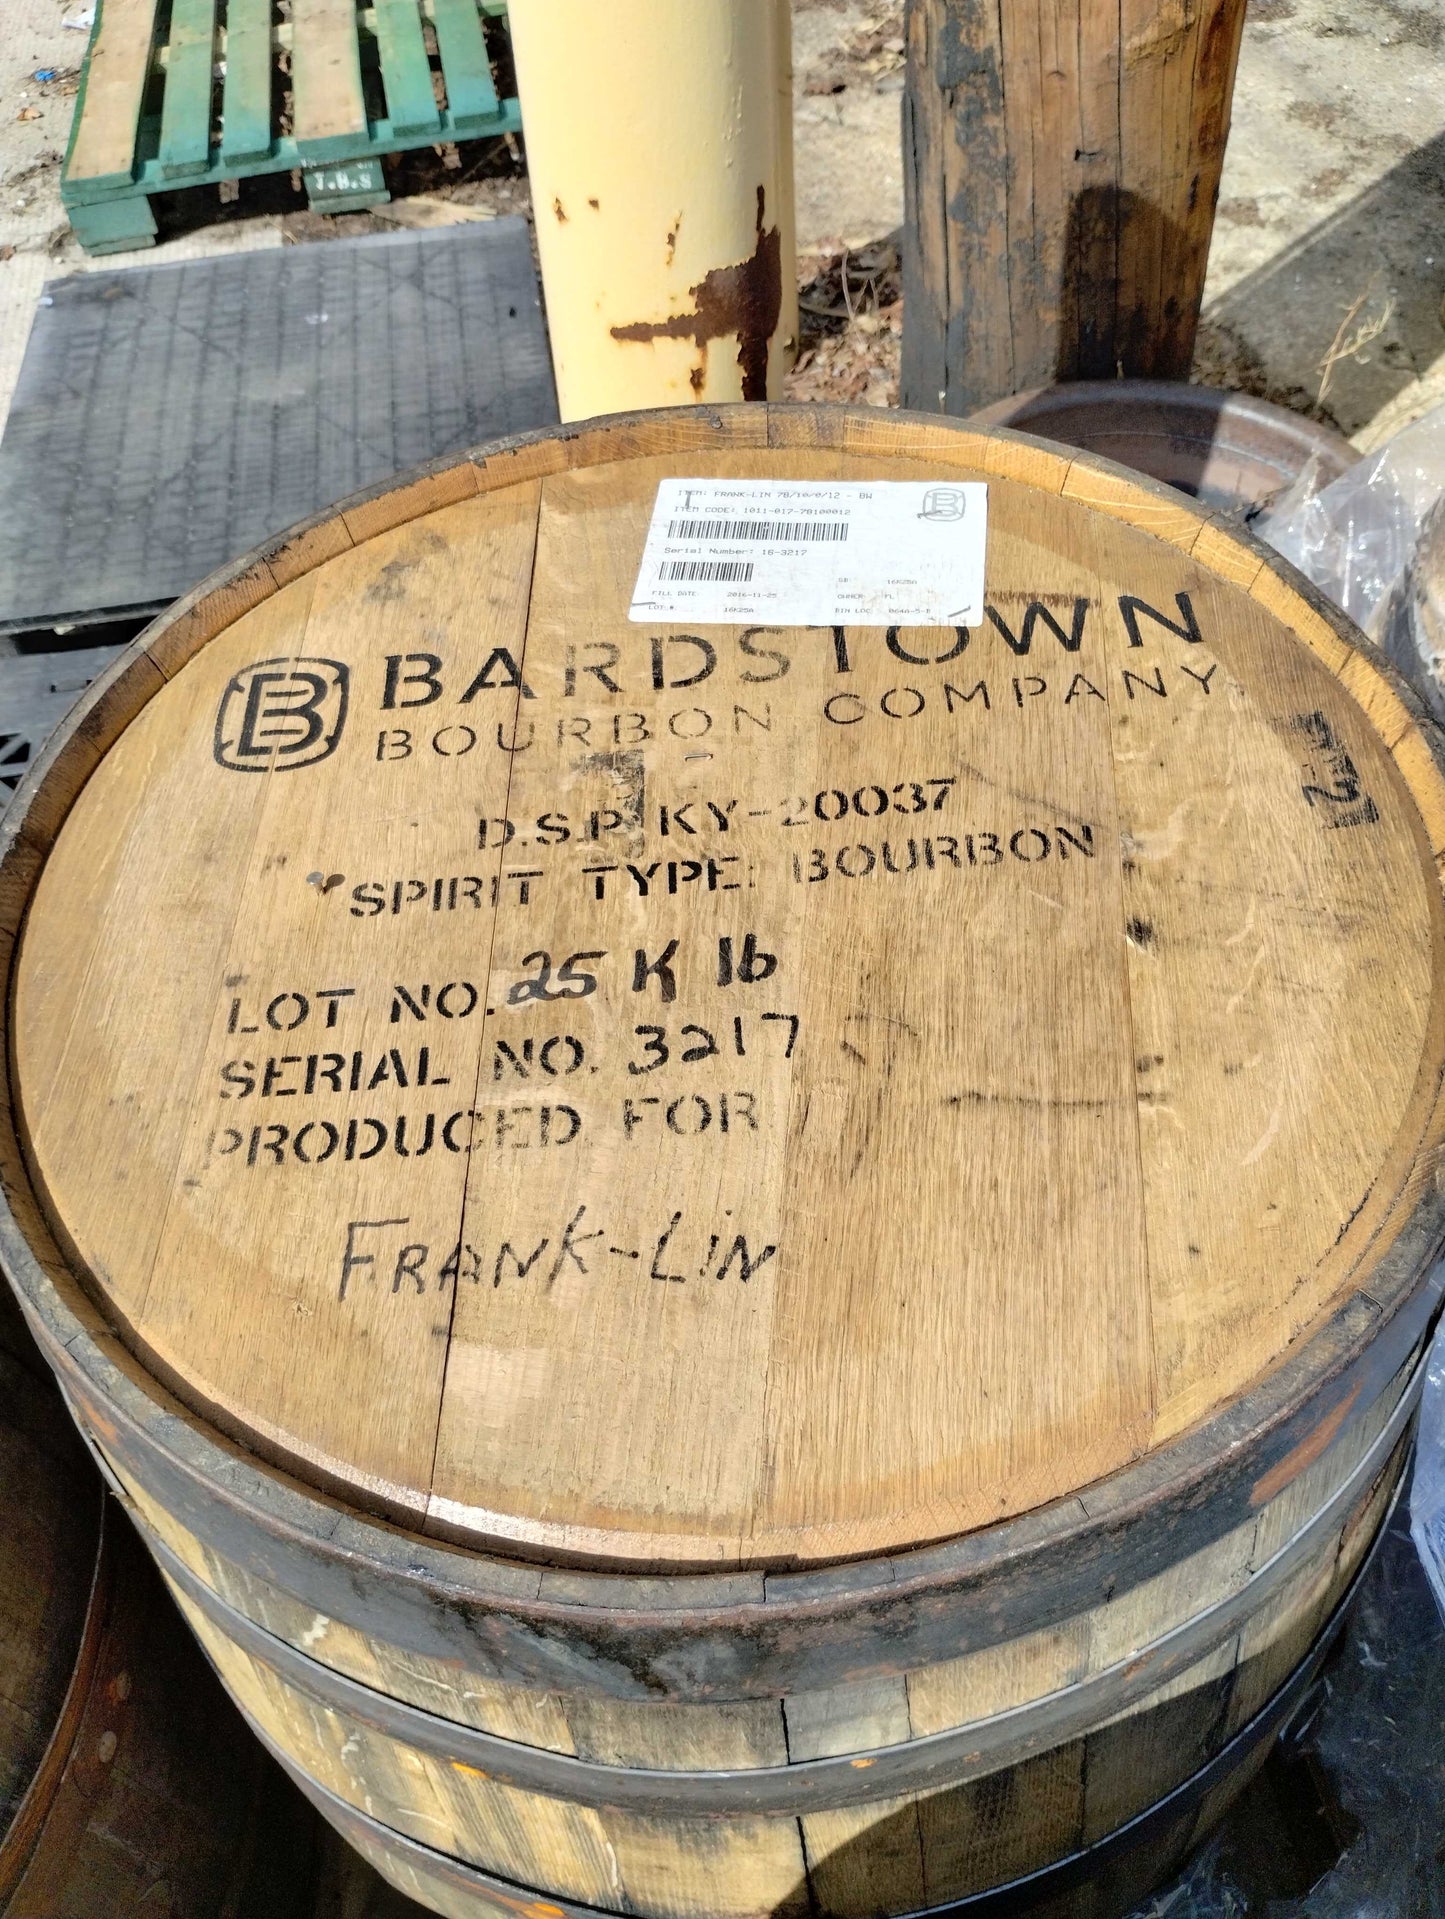 Furniture Grade - Bardstown Bourbon Company - Whiskey Barrel 53 Gallon